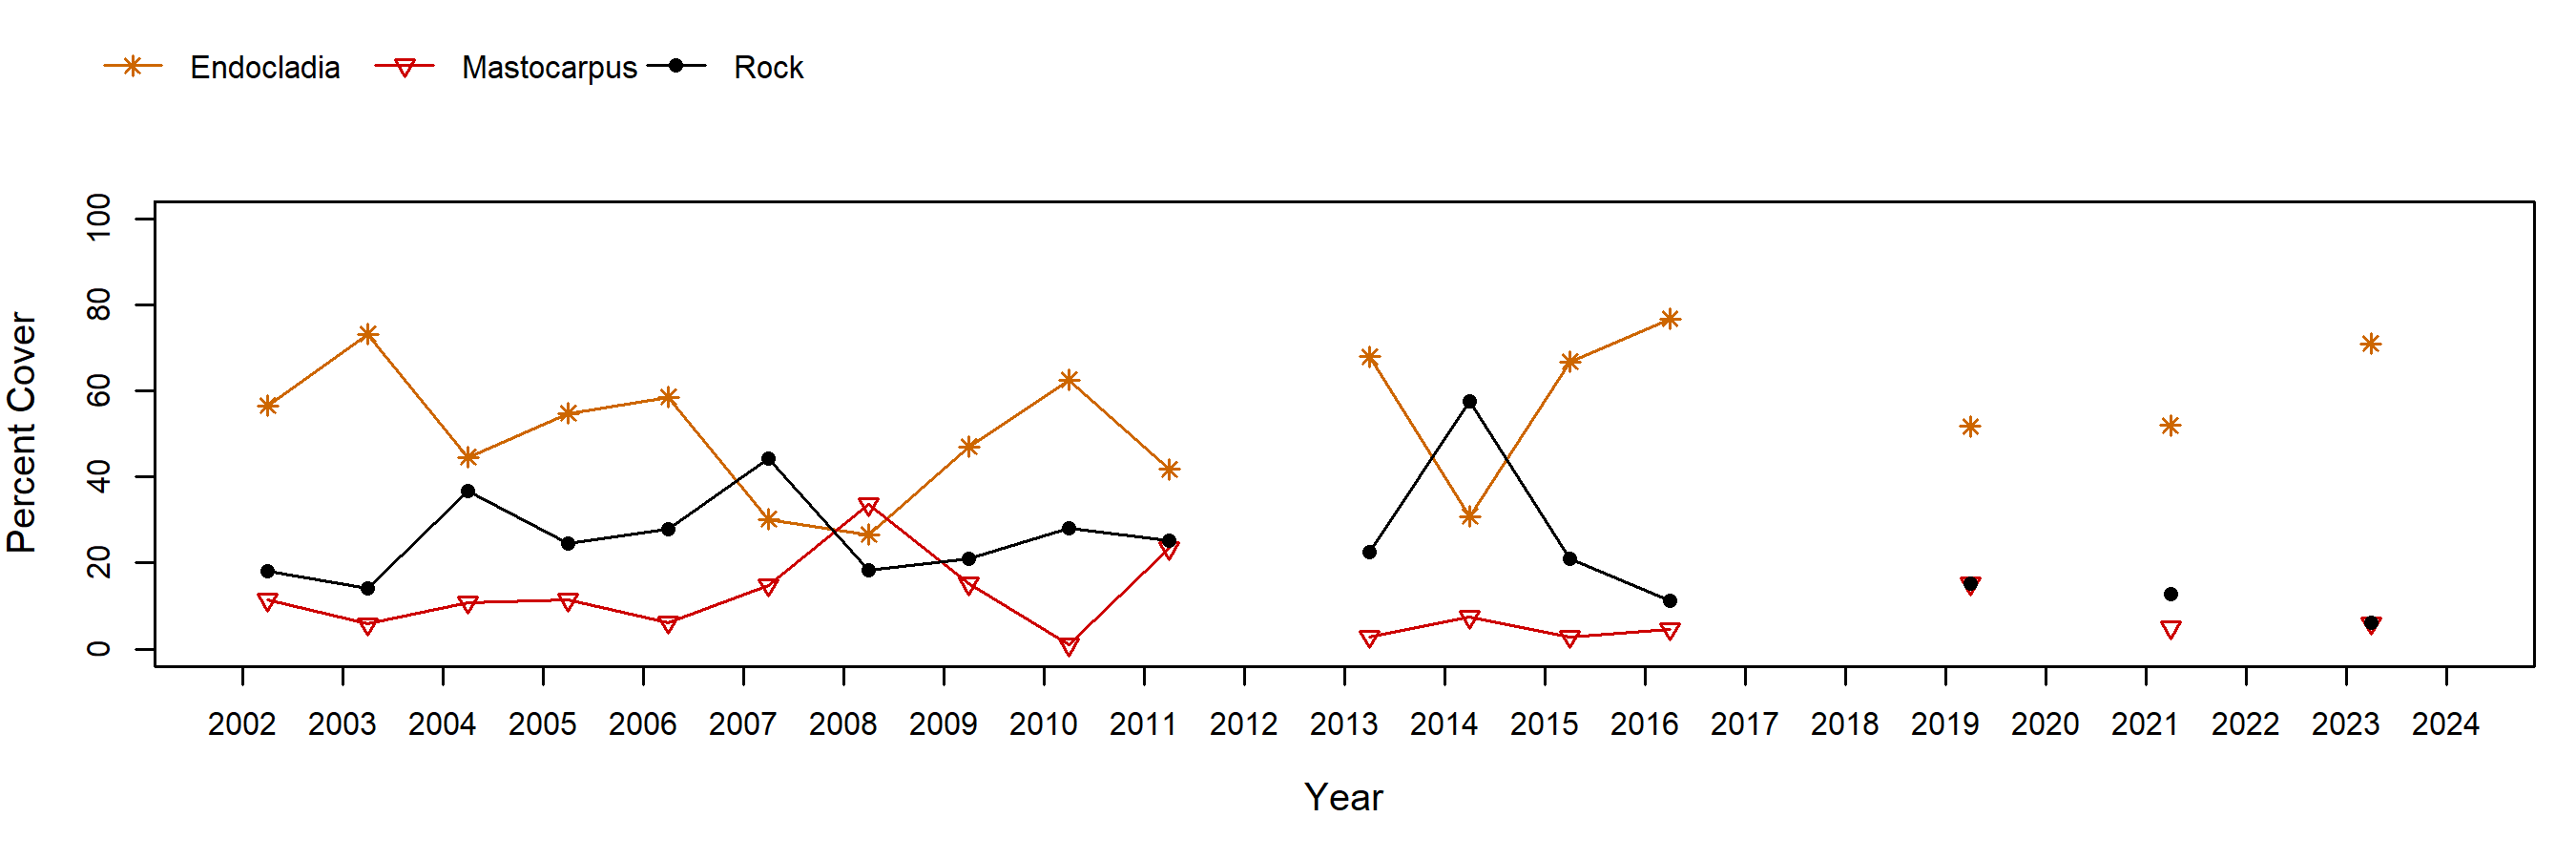 Burnt Hill Endocladia trend plot